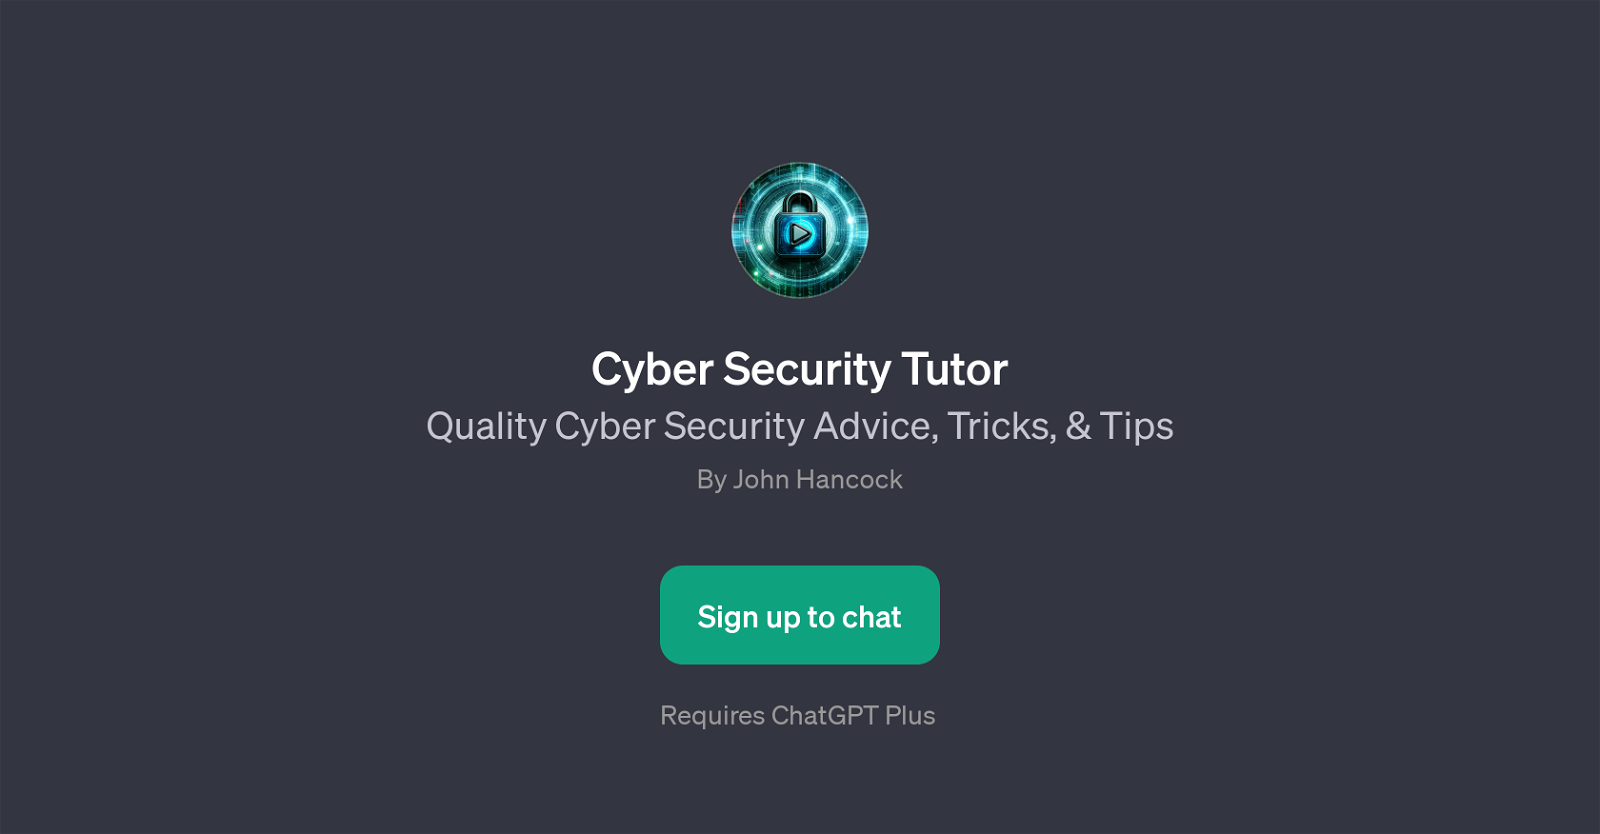 Cyber Security Tutor website